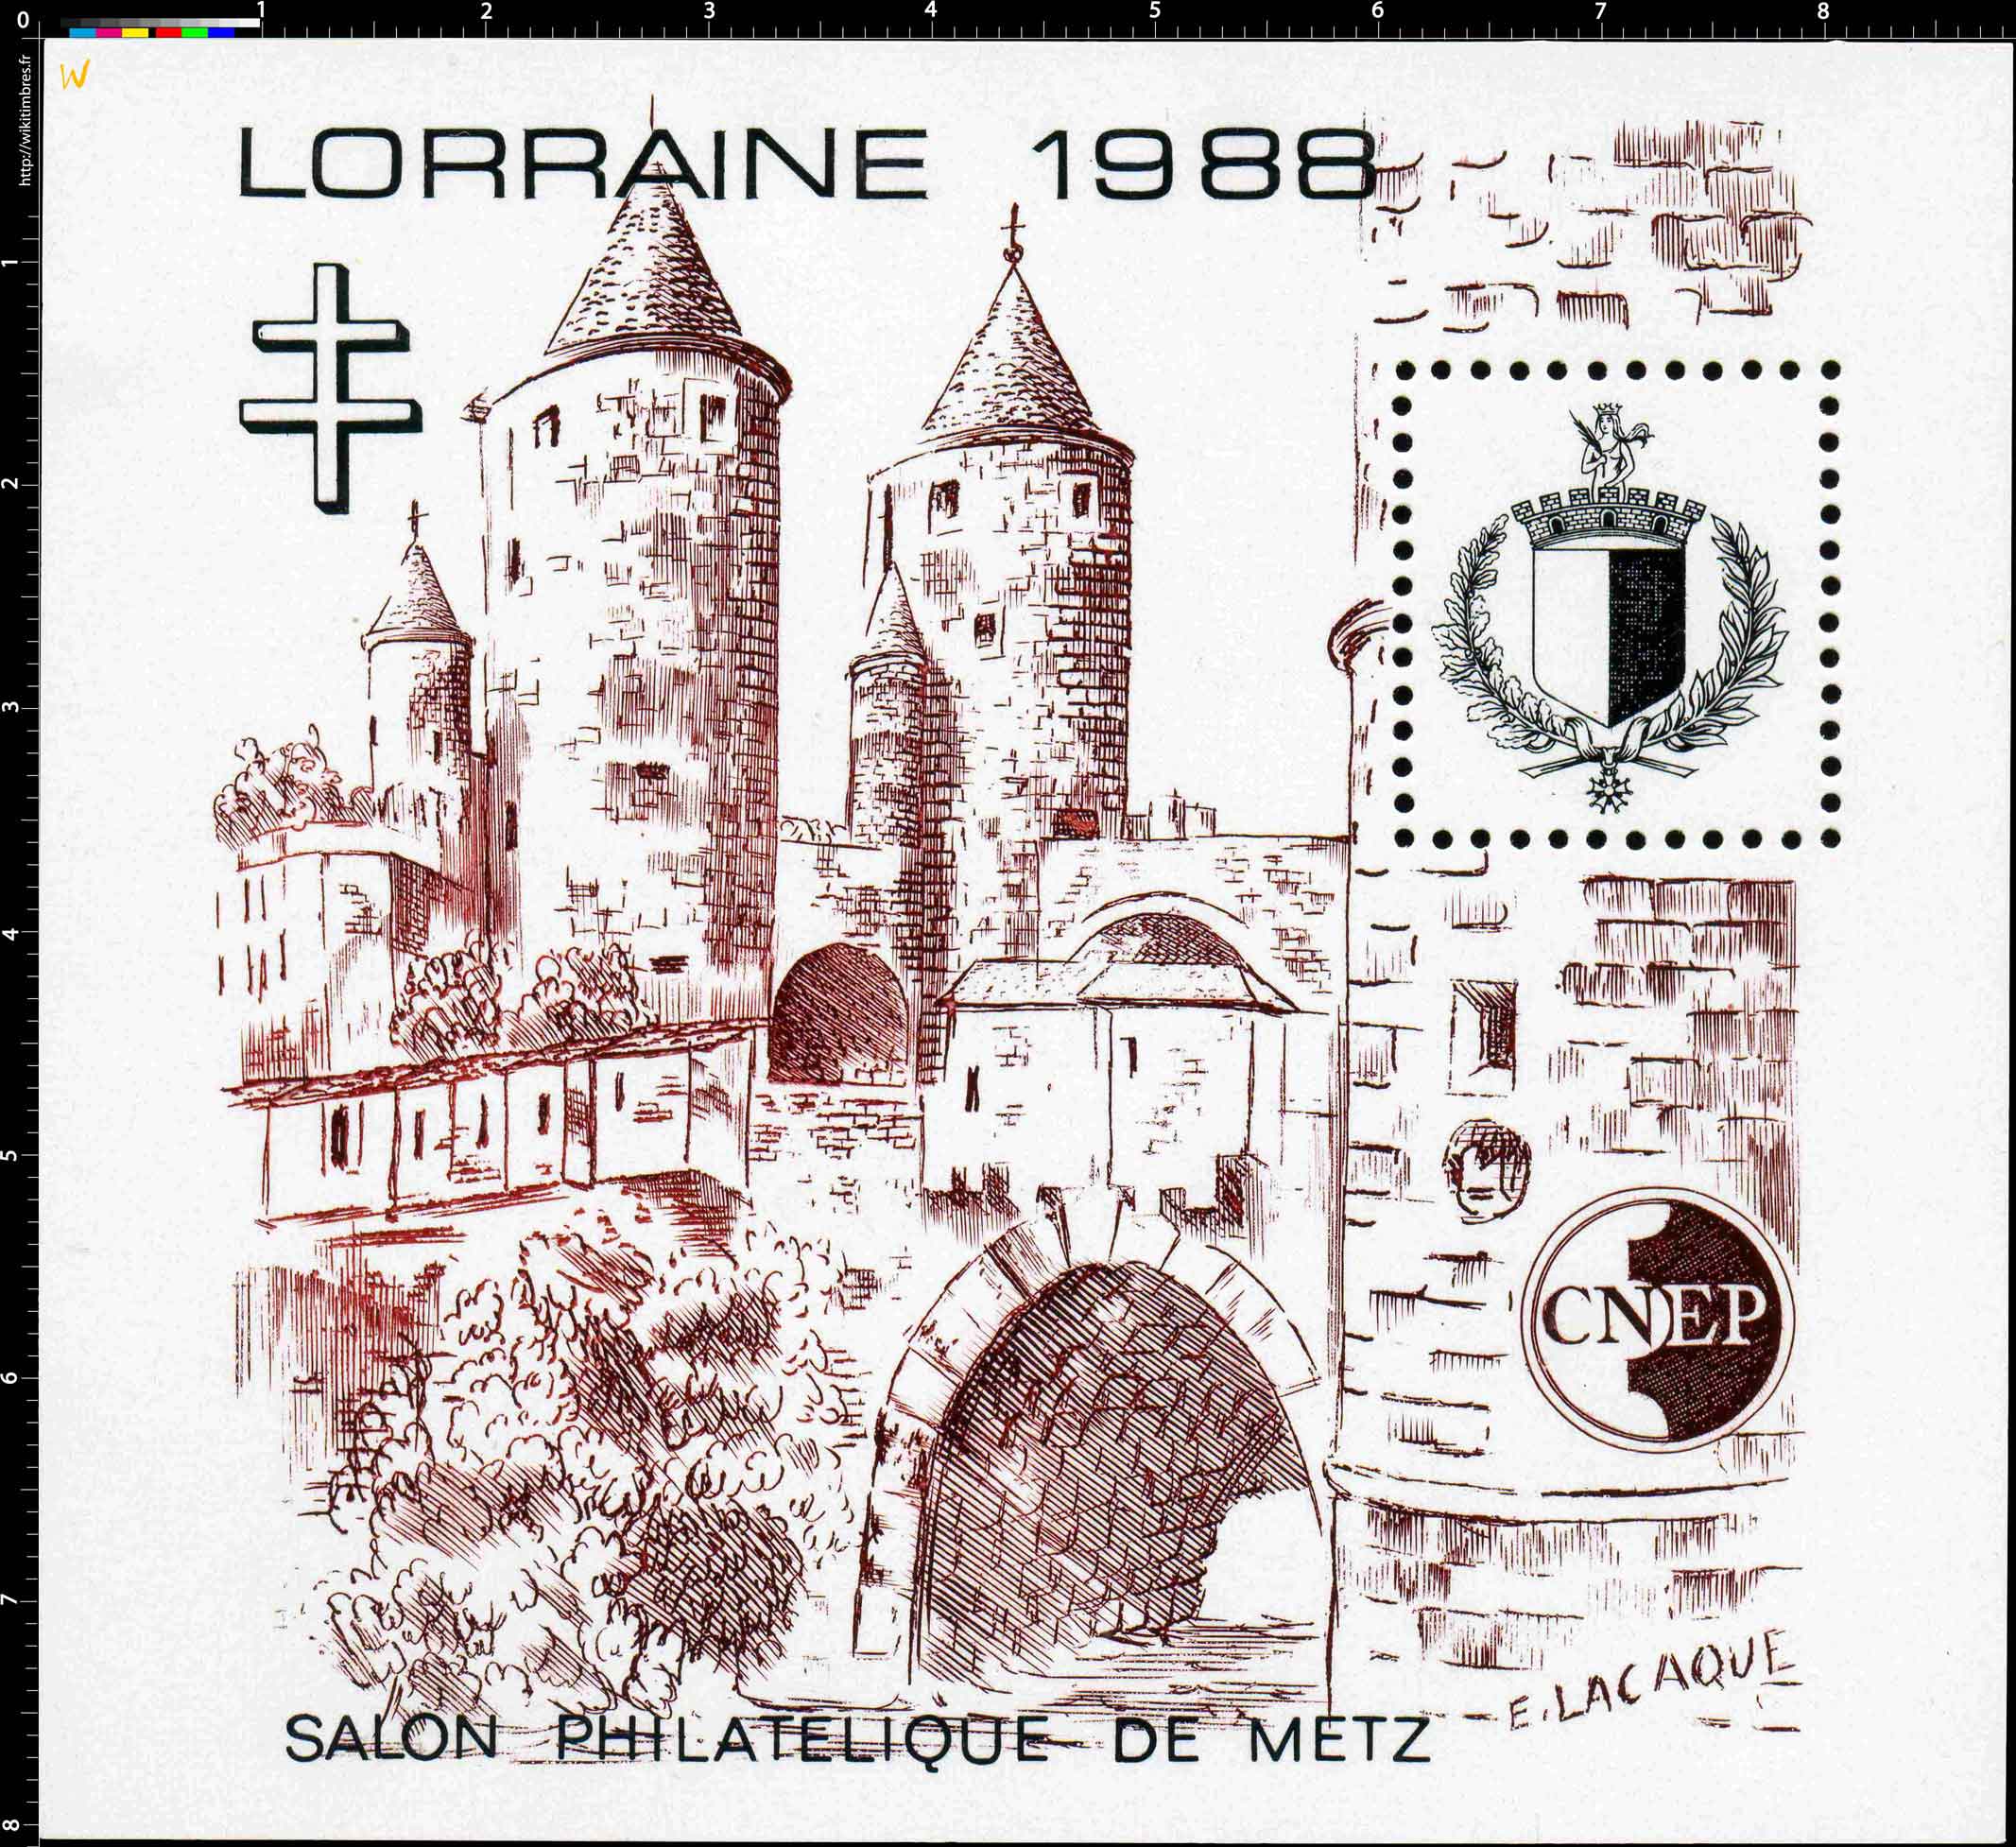 1988 Lorraine Salon philatélique de Metz CNEP